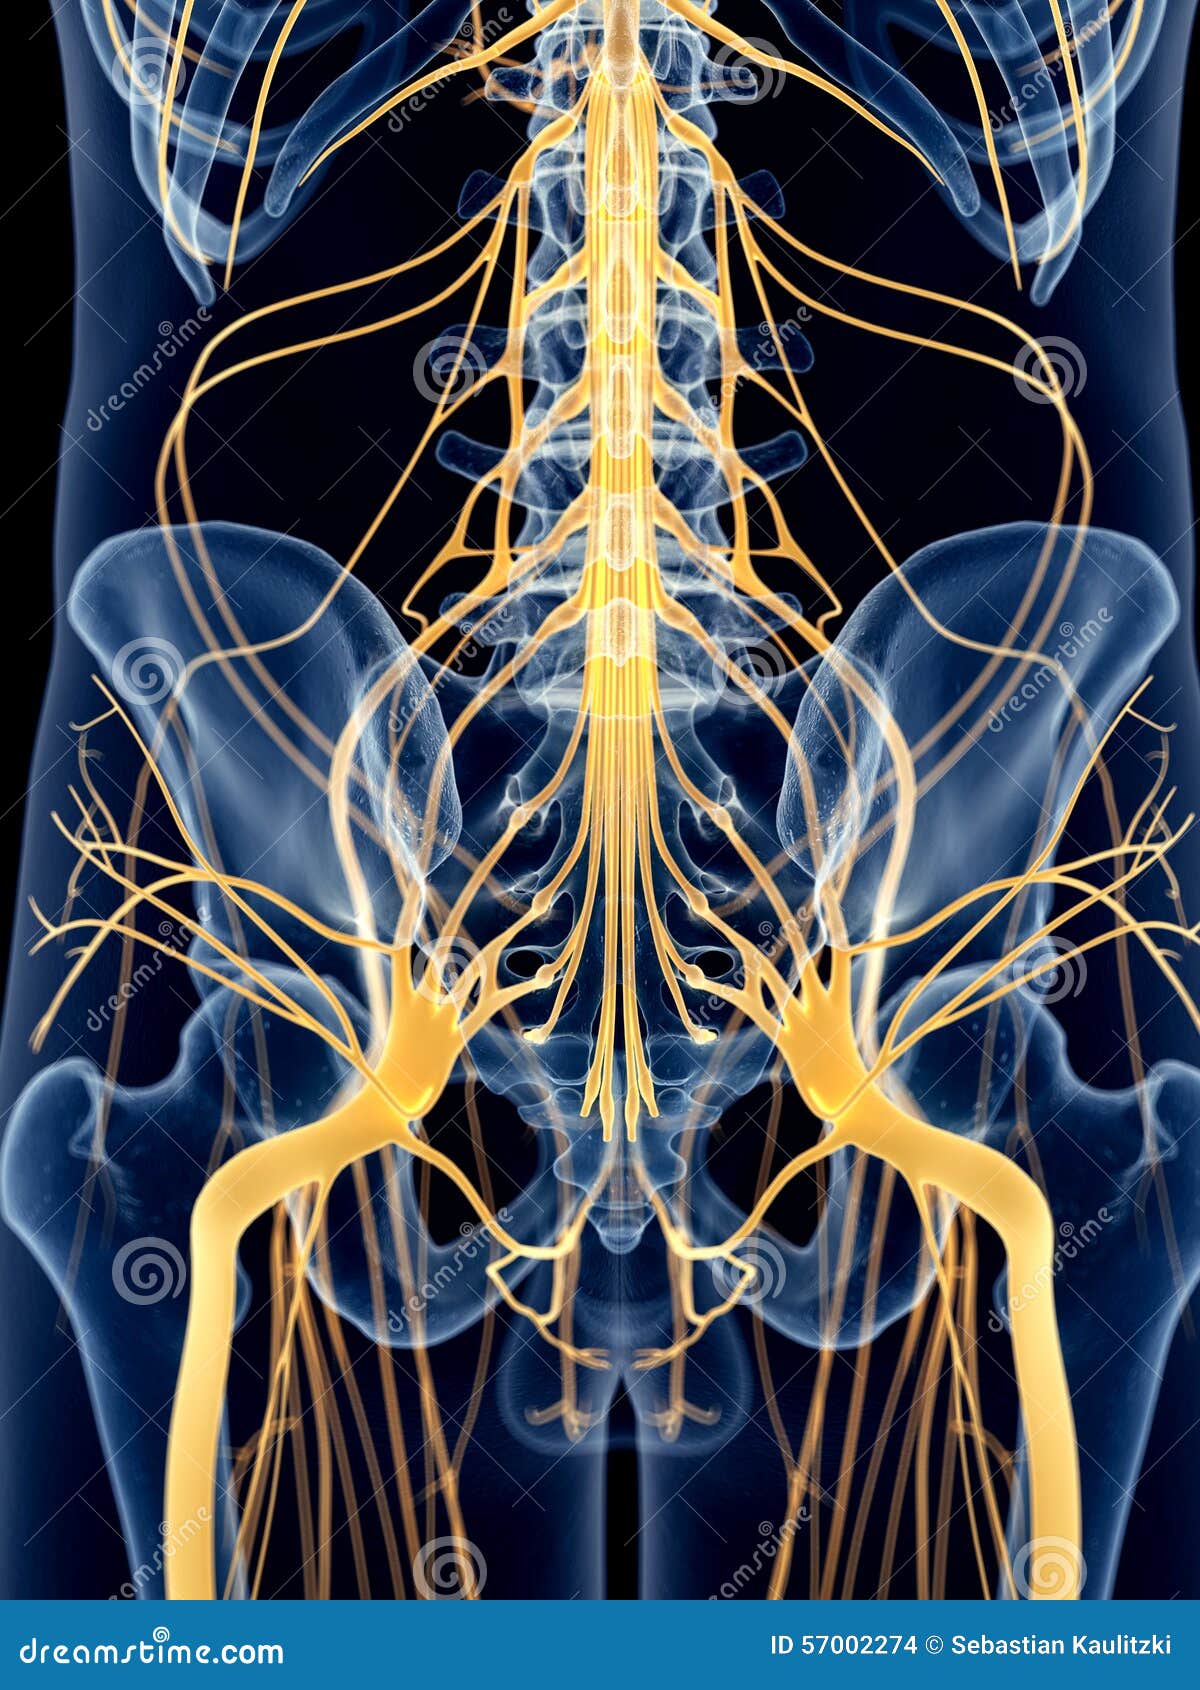 the hip nerves